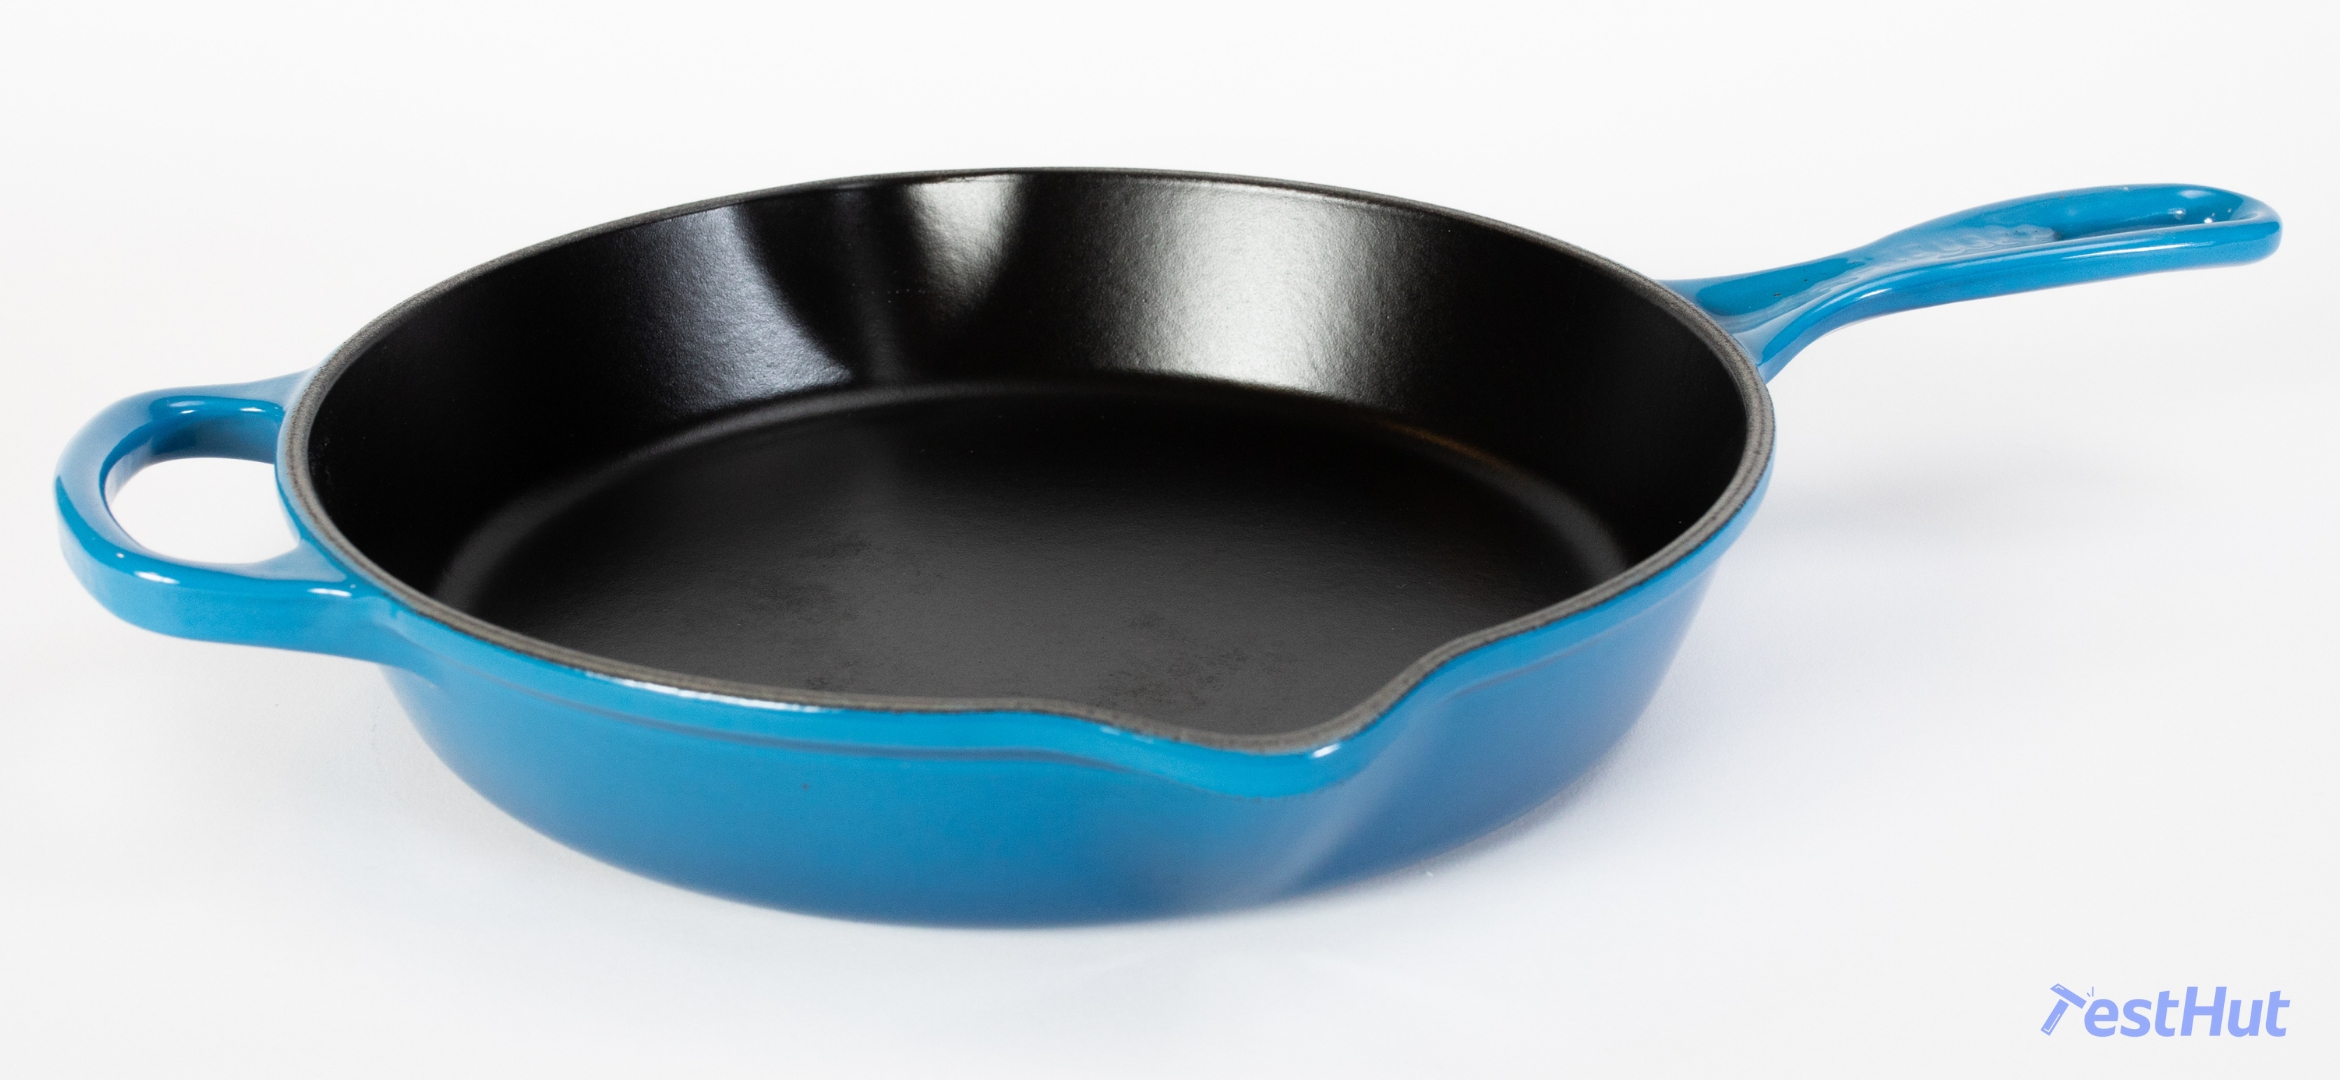 5 Valuable Benefits of Enamel Cast Iron Cookware